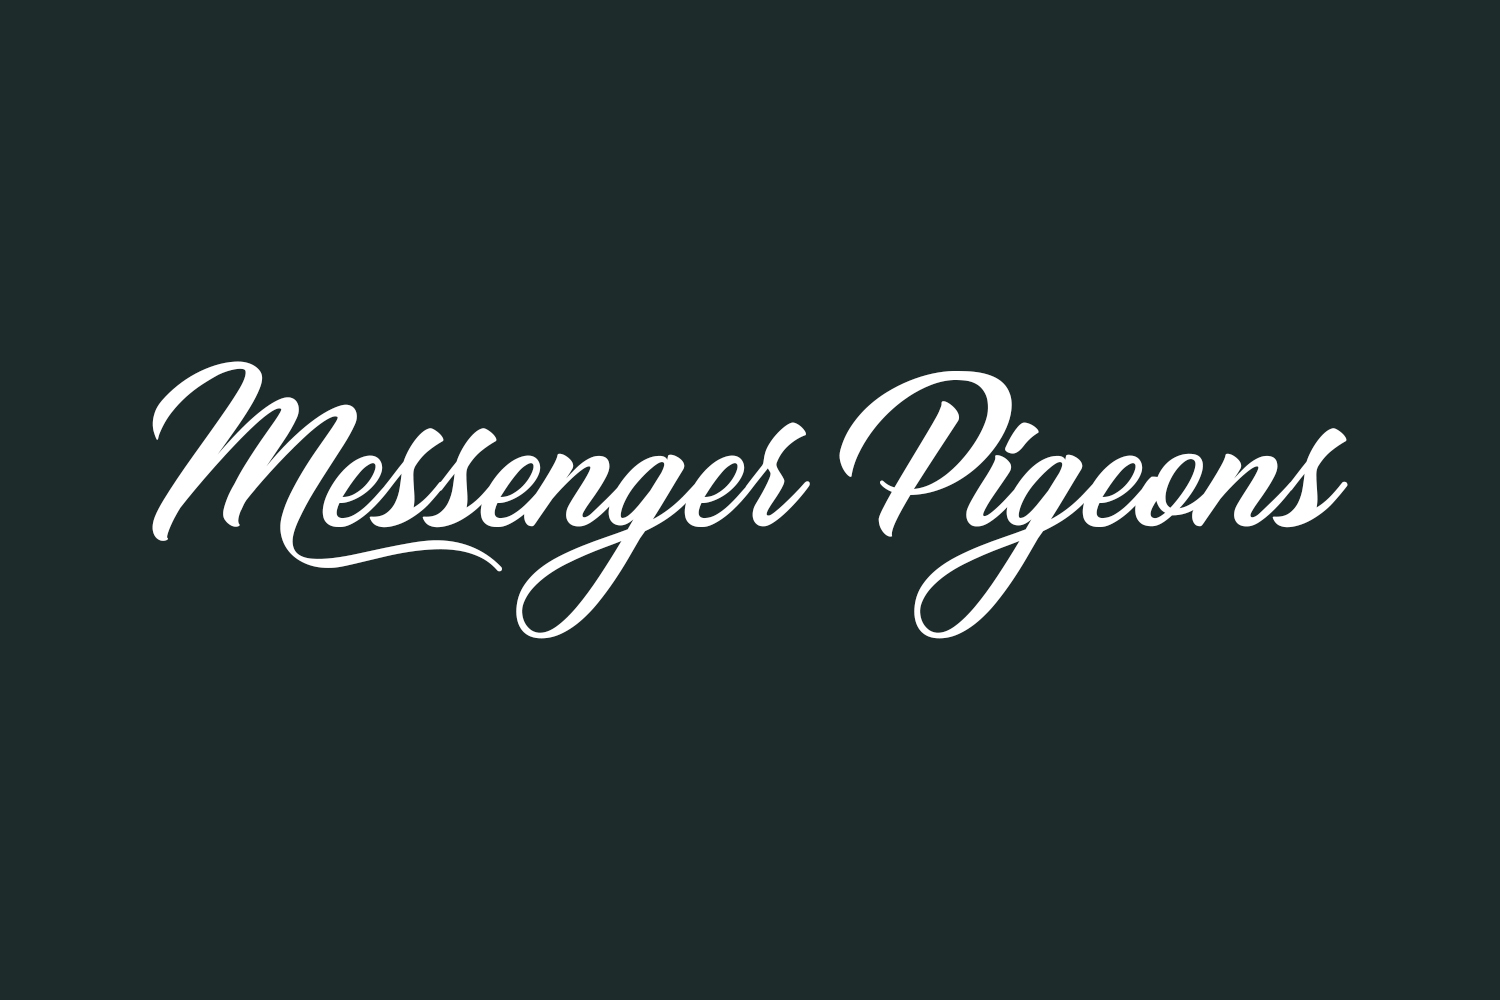 Messenger Pigeons Free Font